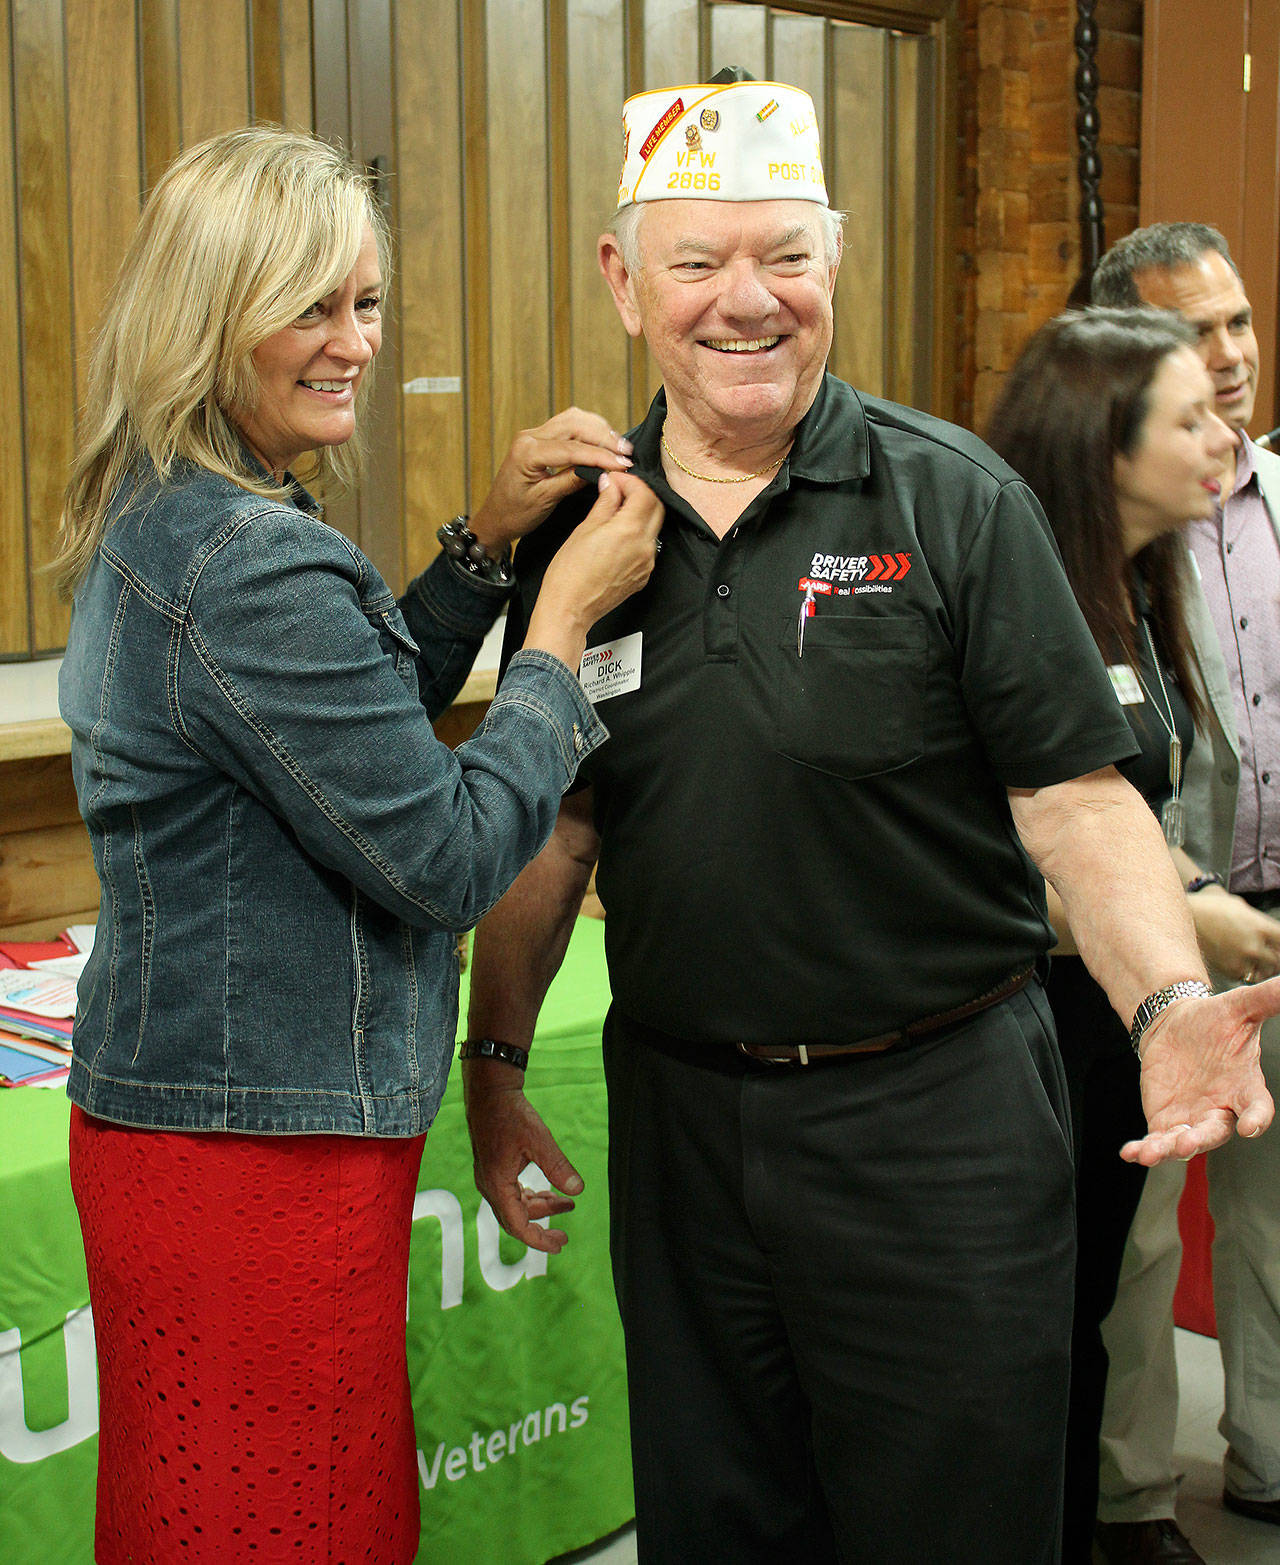 Richard Whipple receives his pin at the Vietnam Veterans Pinning Ceremony on Wednesday, Sept. 19. Olivia Sullivan/staff photo